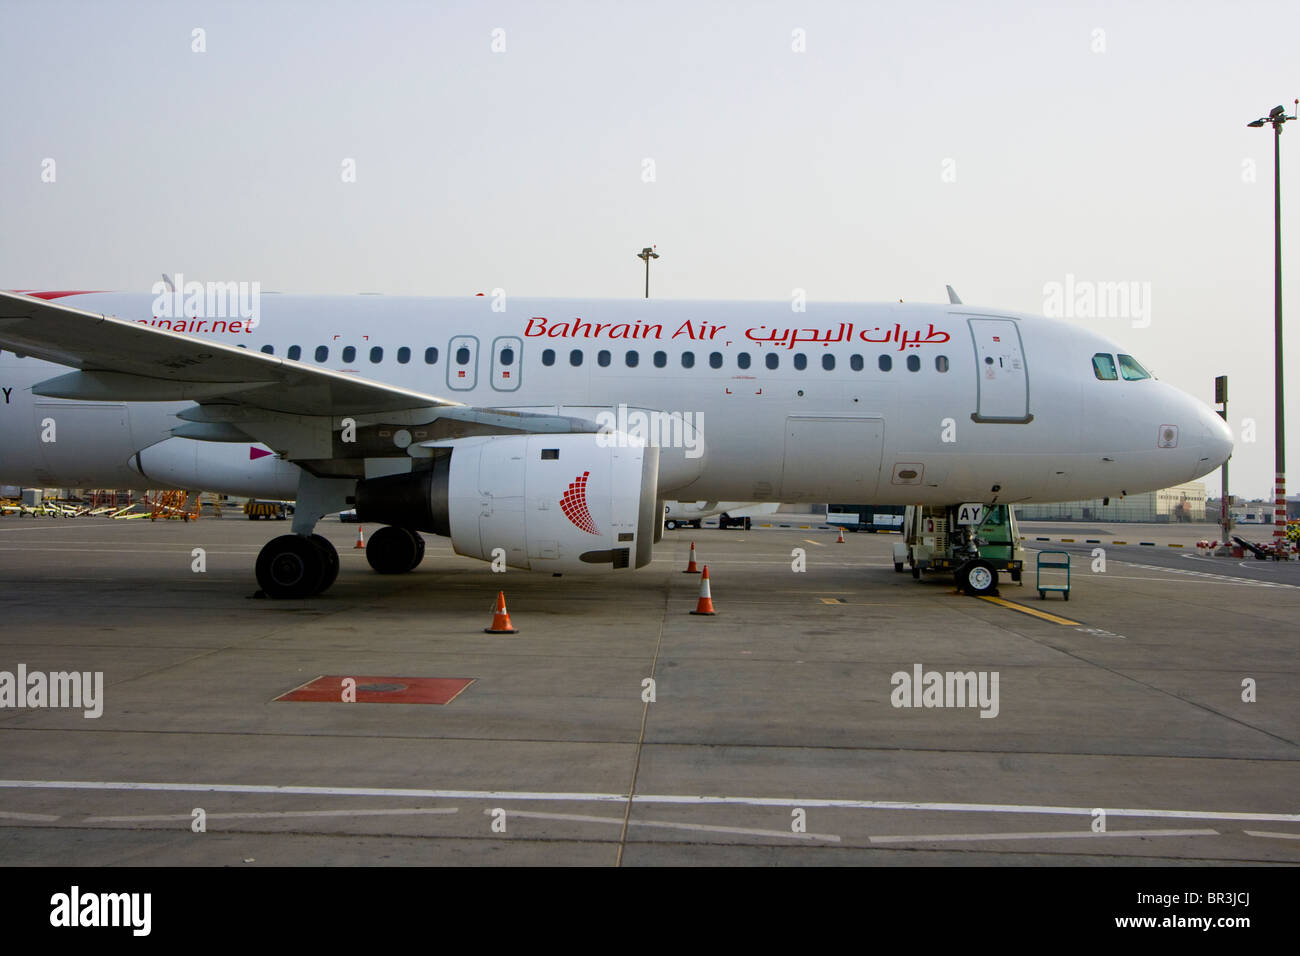 bahrain flights arrivals departures